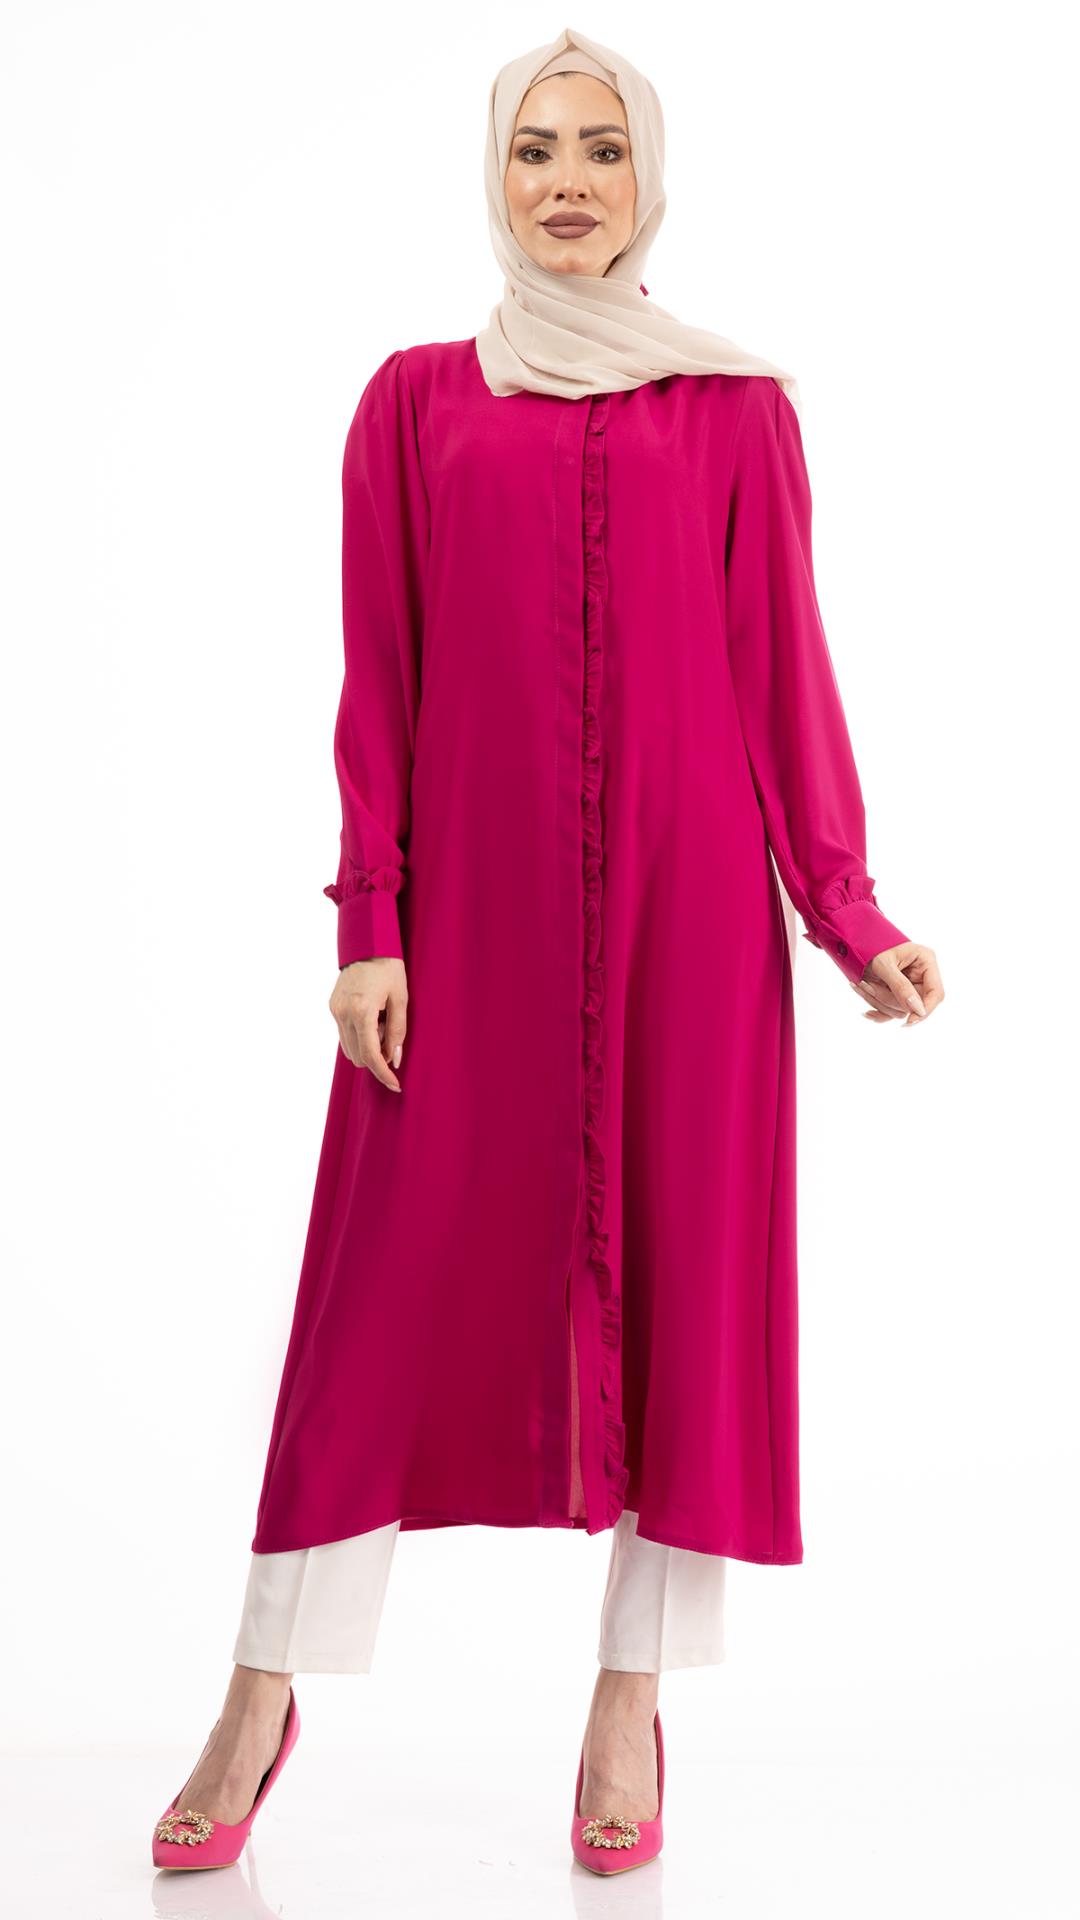 A formal shirt for Hijab women